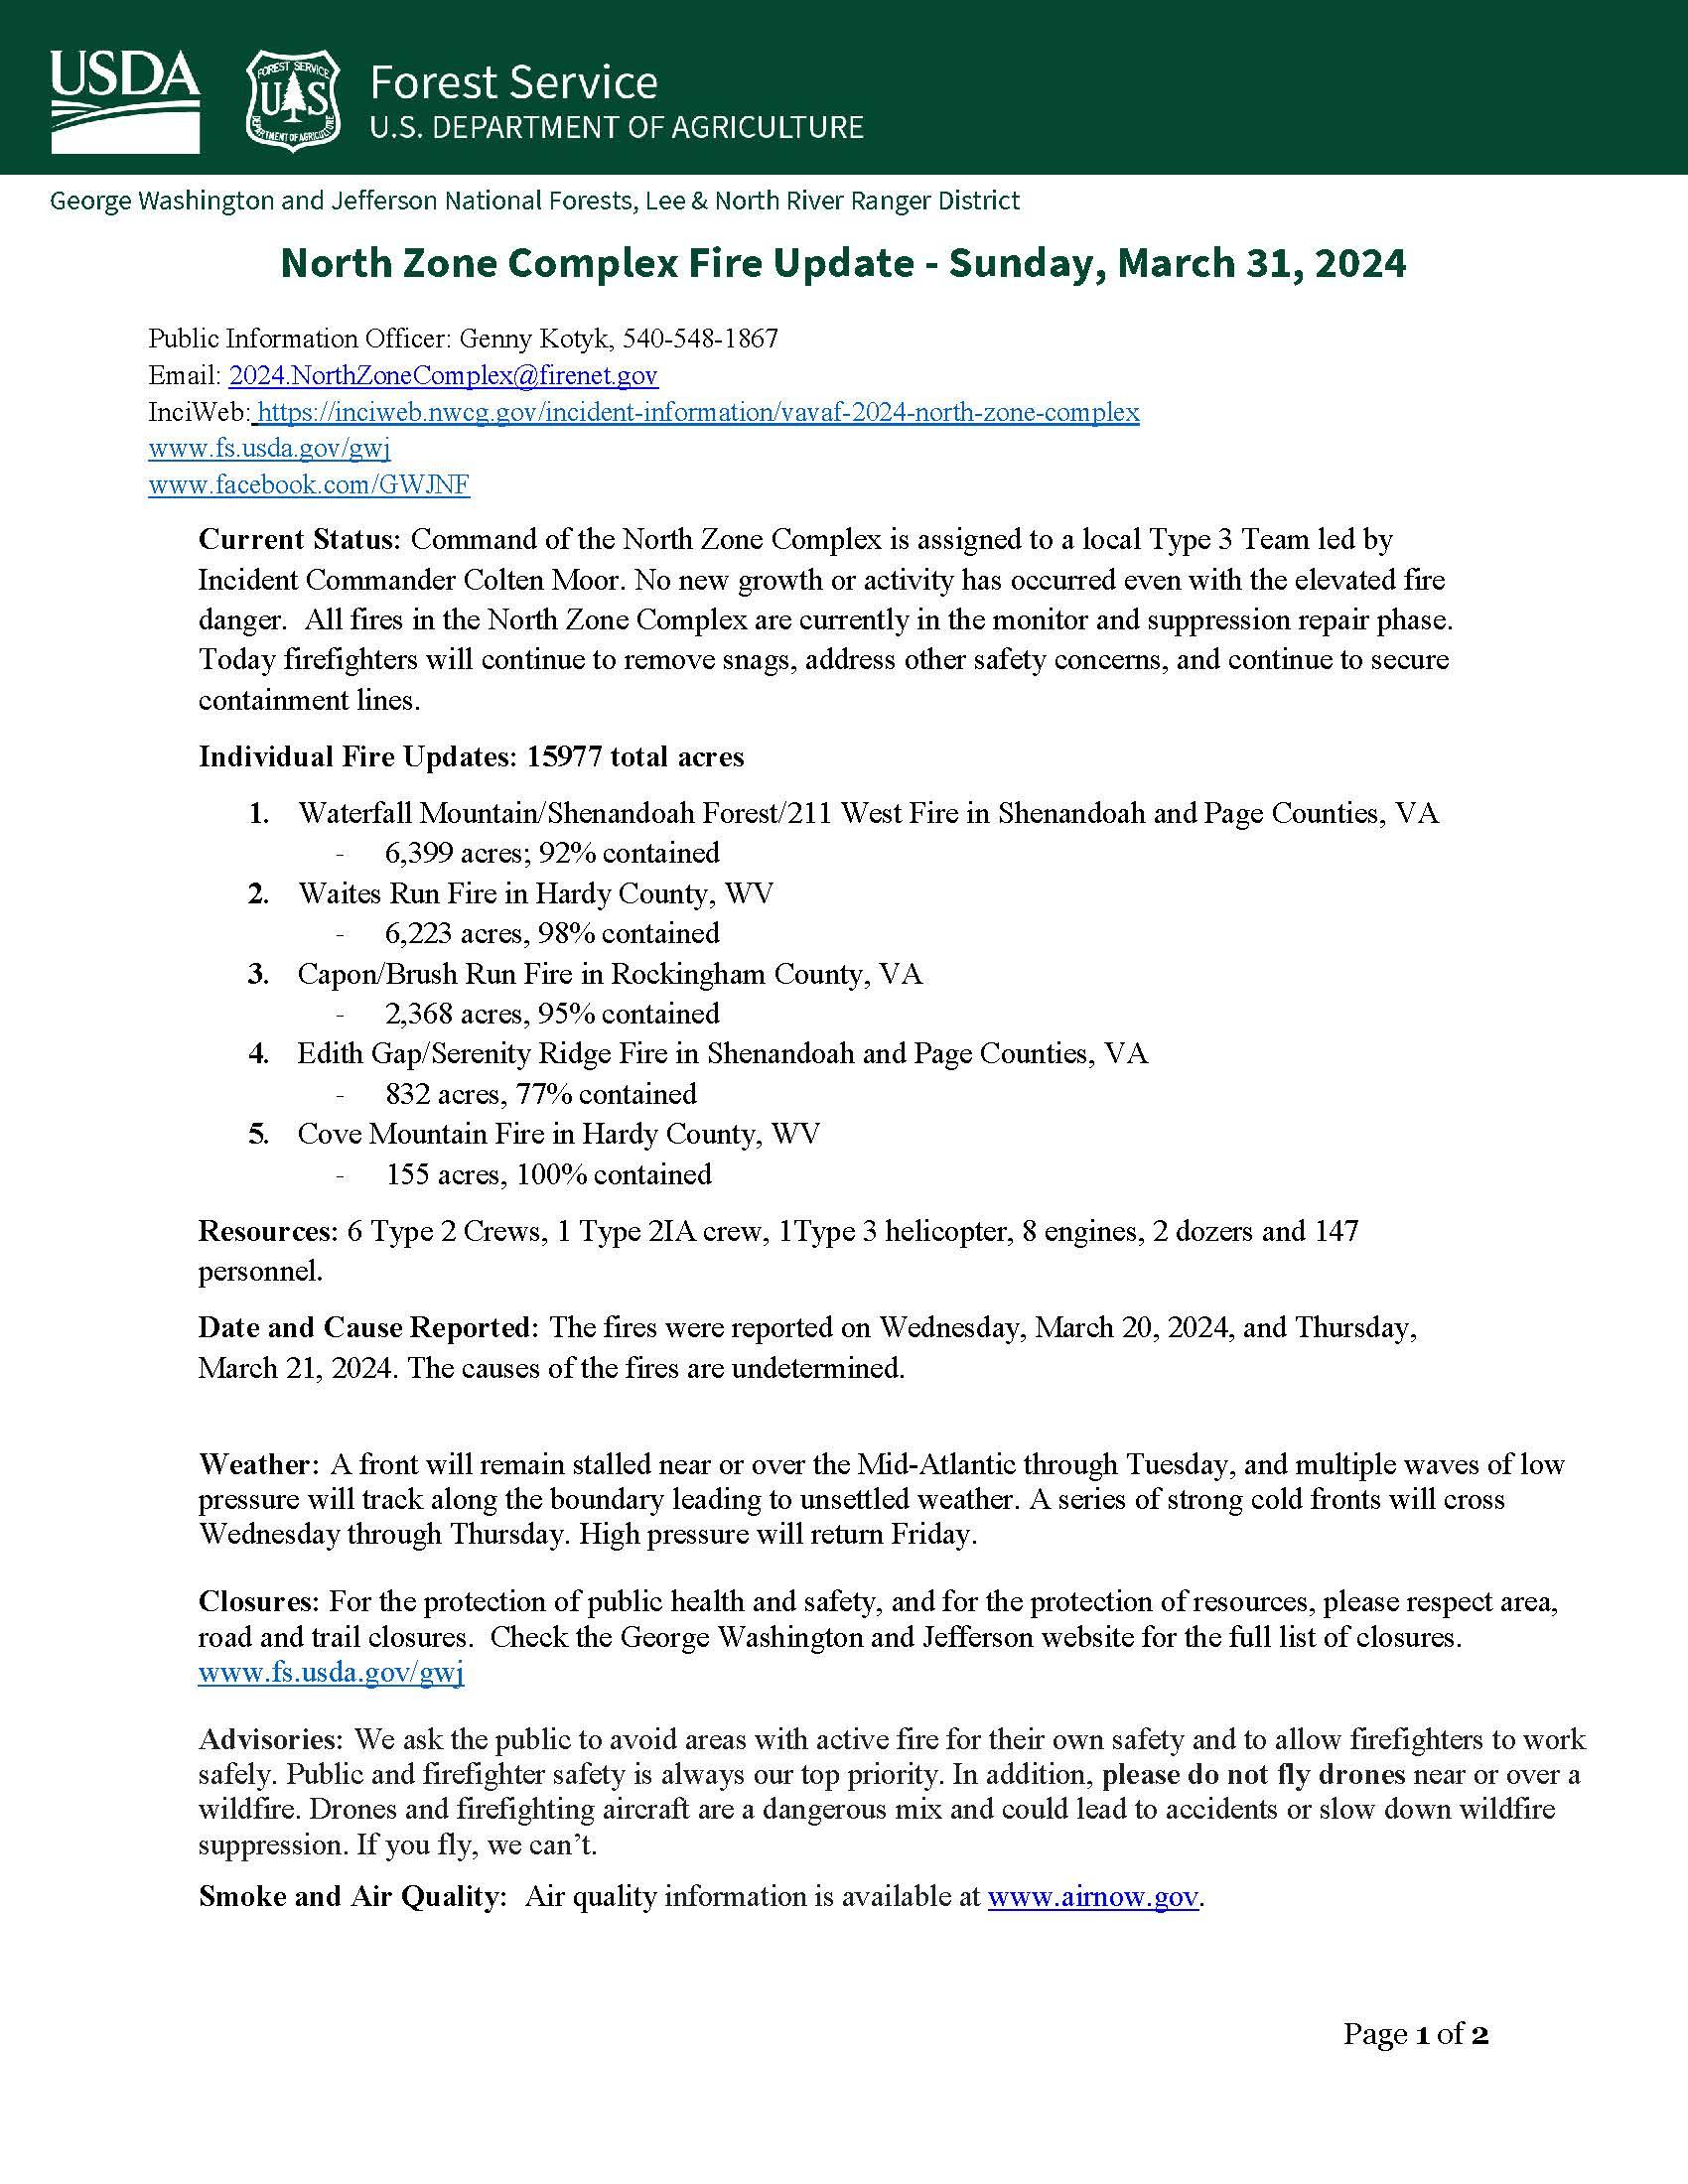 North Zone Complex Update March 31, 2024 page 1